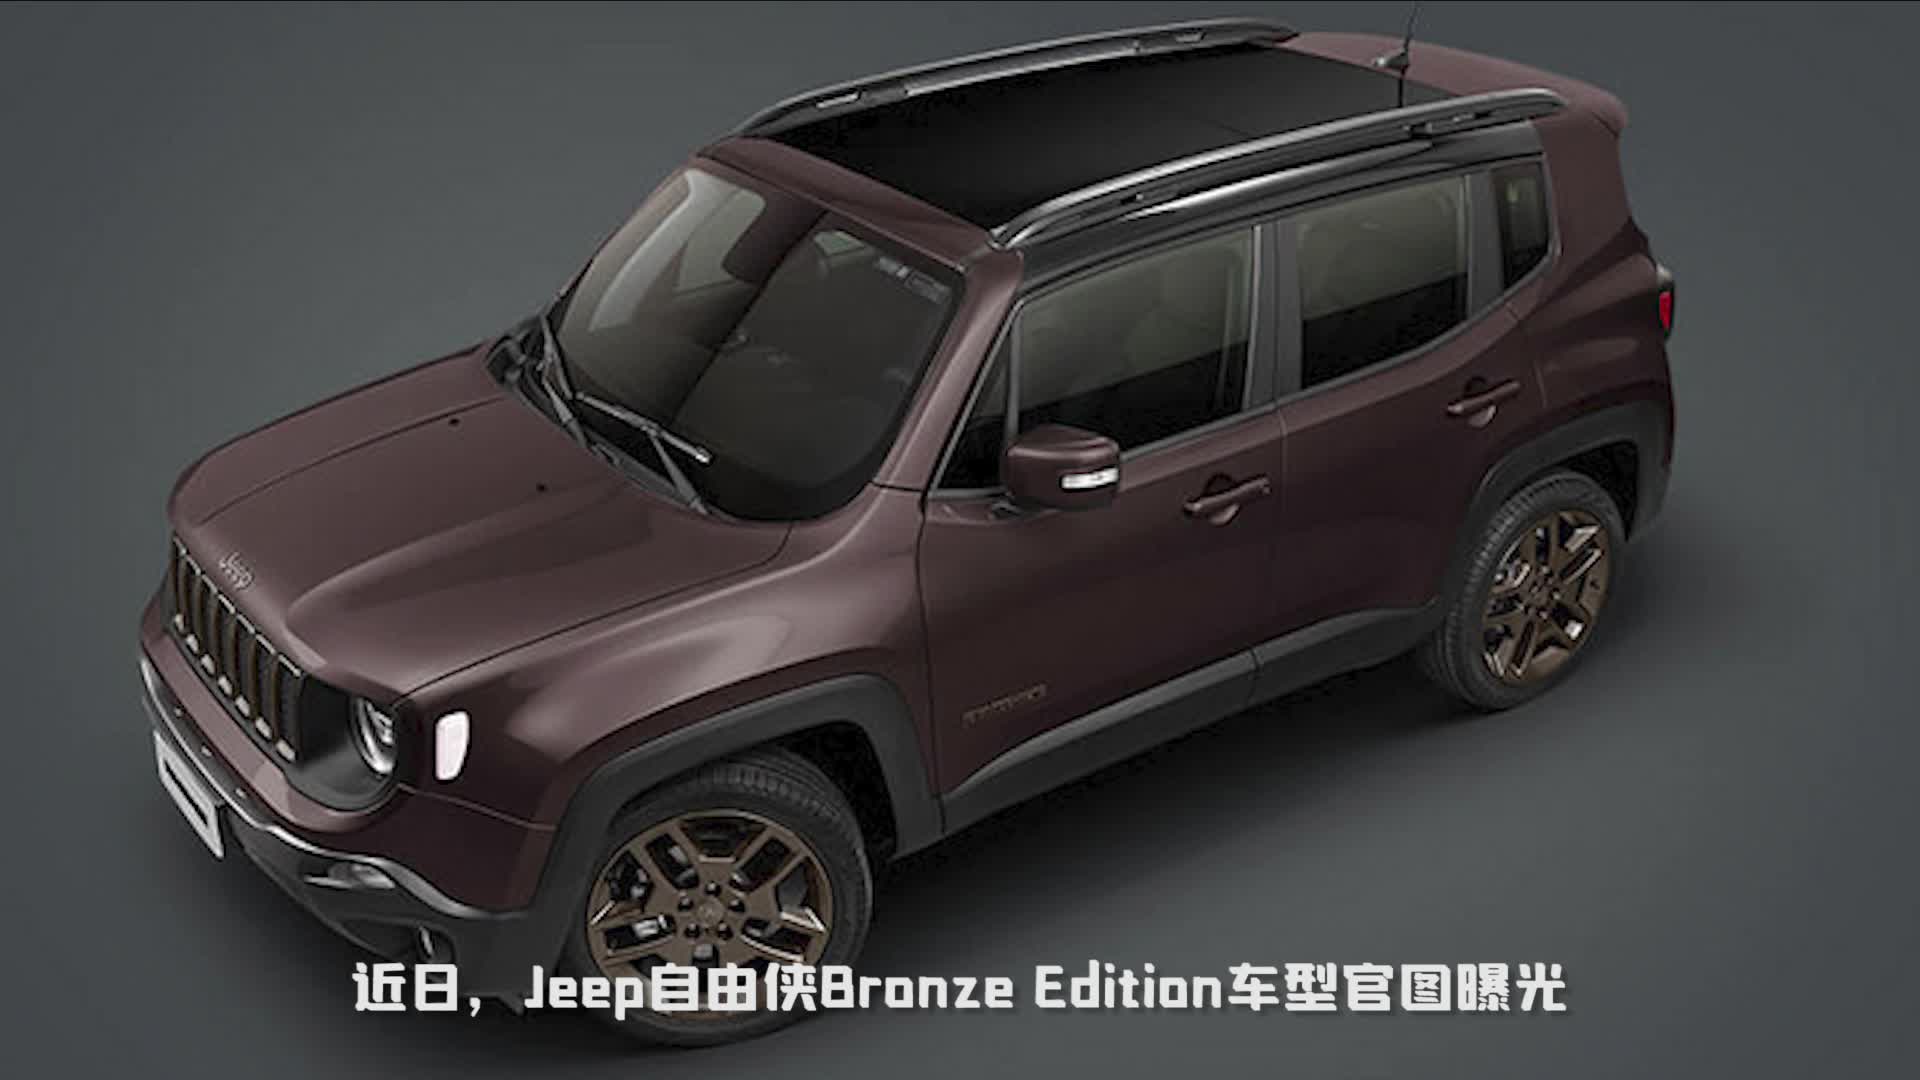 Jeep自由侠青铜特别版 专属棕色车漆 灯组熏黑设计 造型硬朗时尚